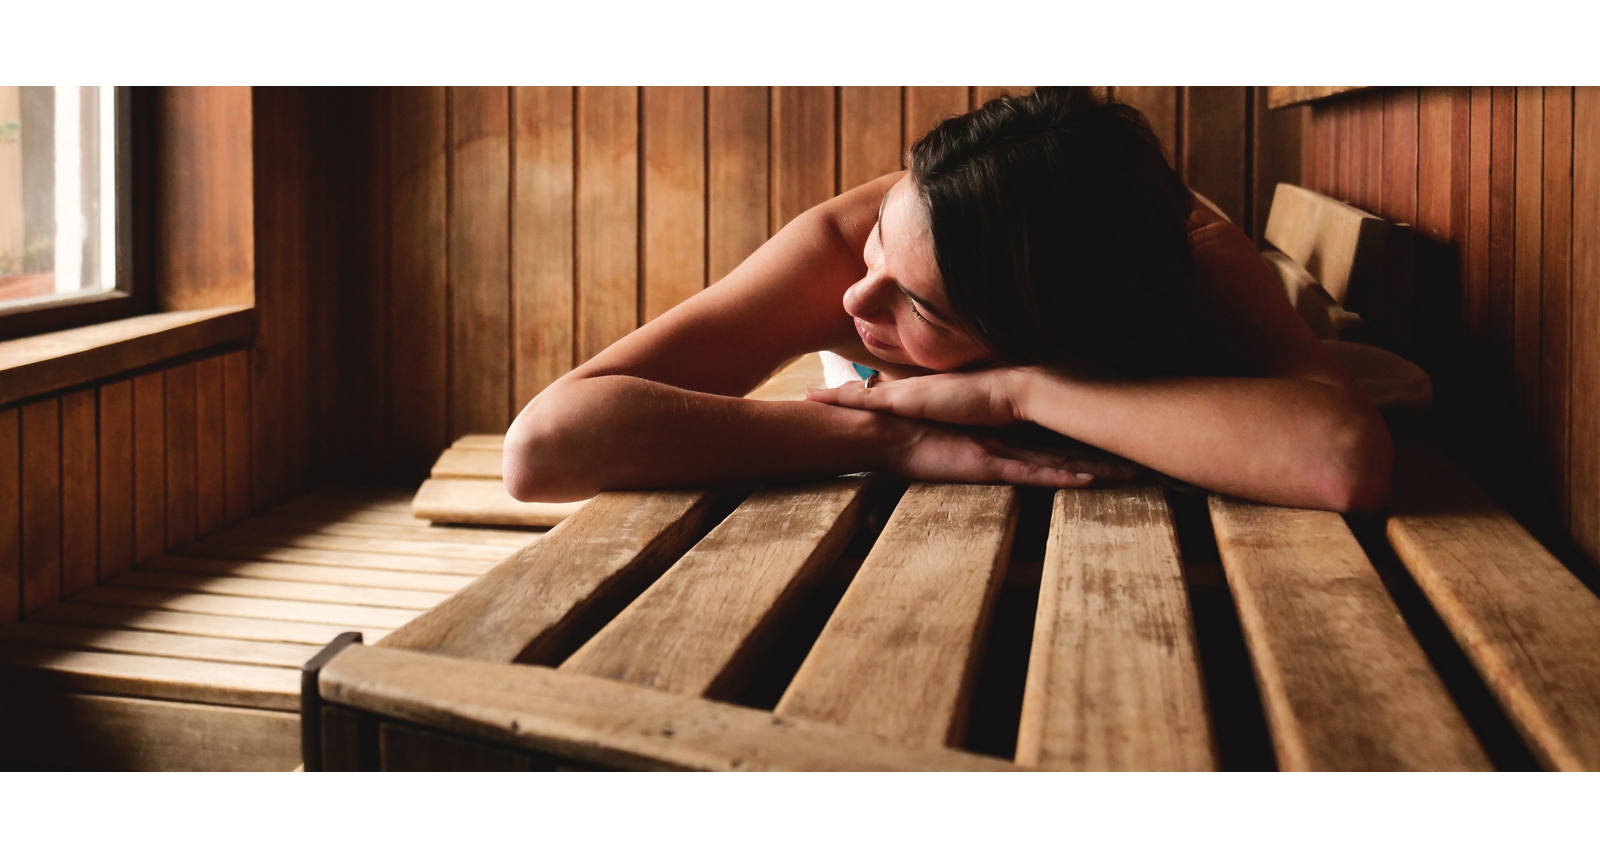 La sauna è salutare?